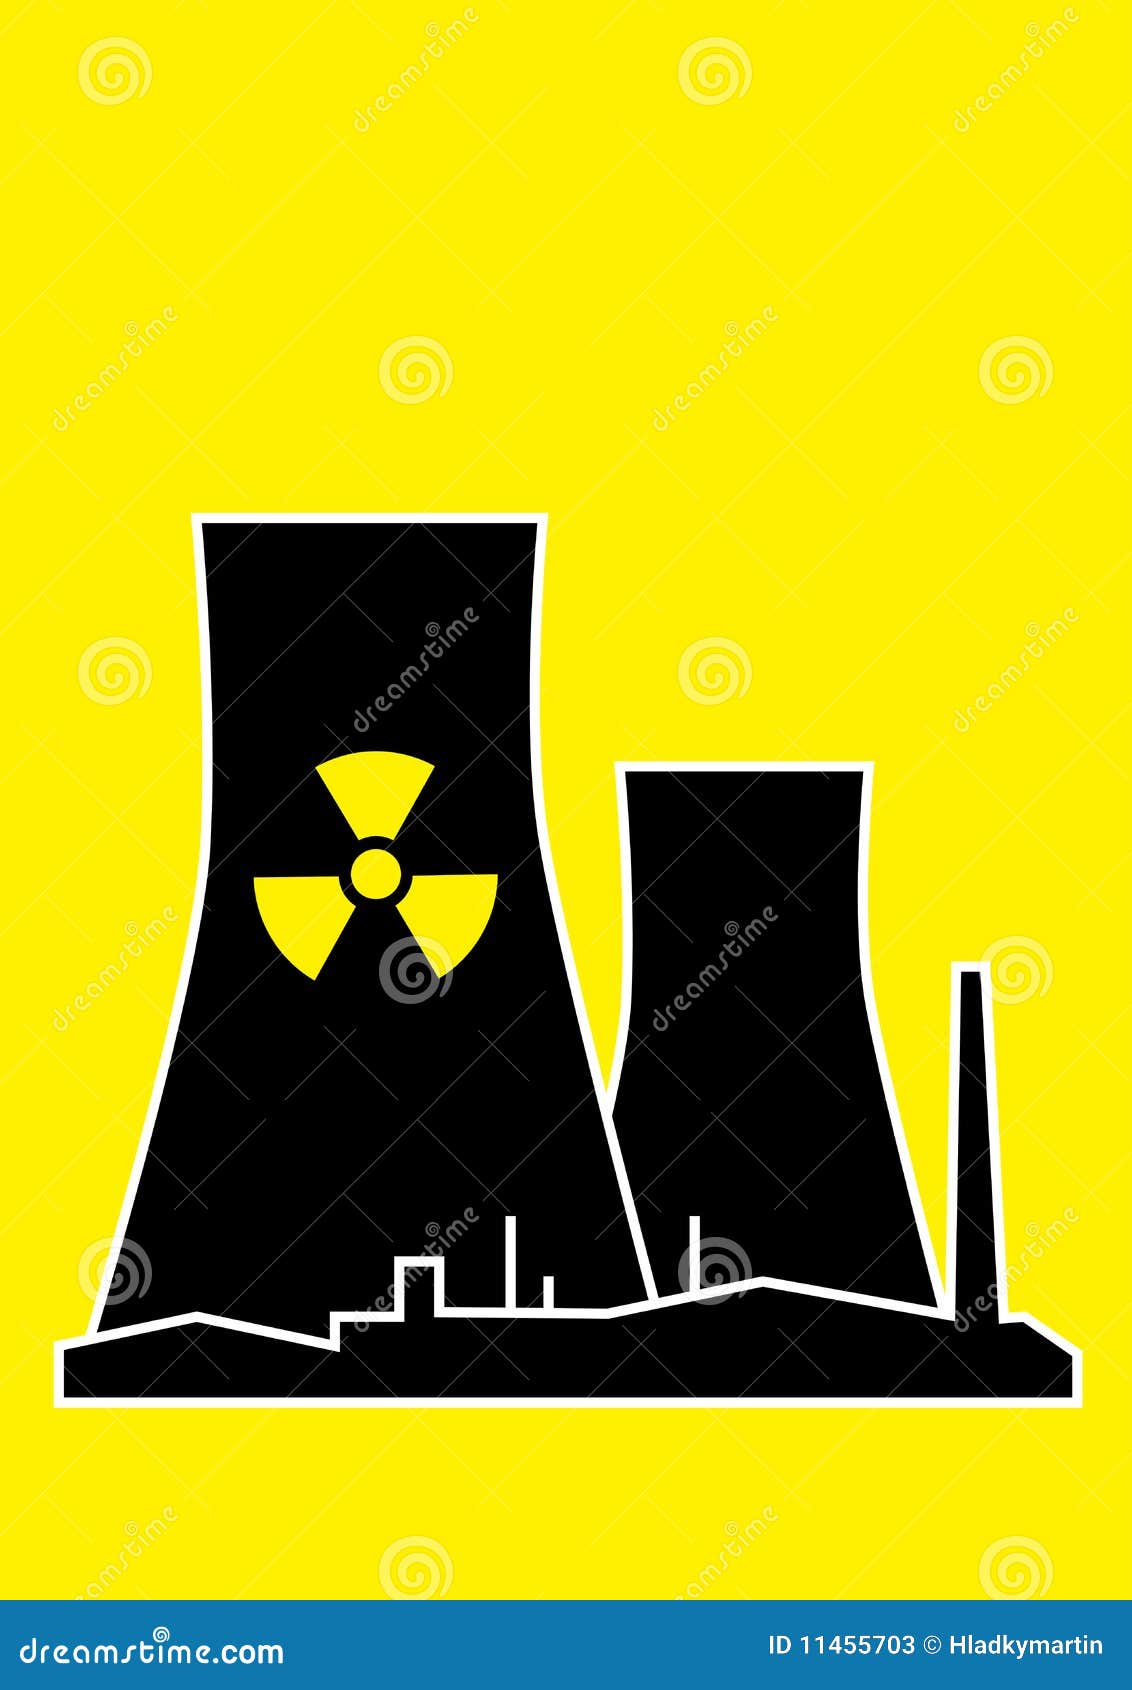 nuclear plant clip art